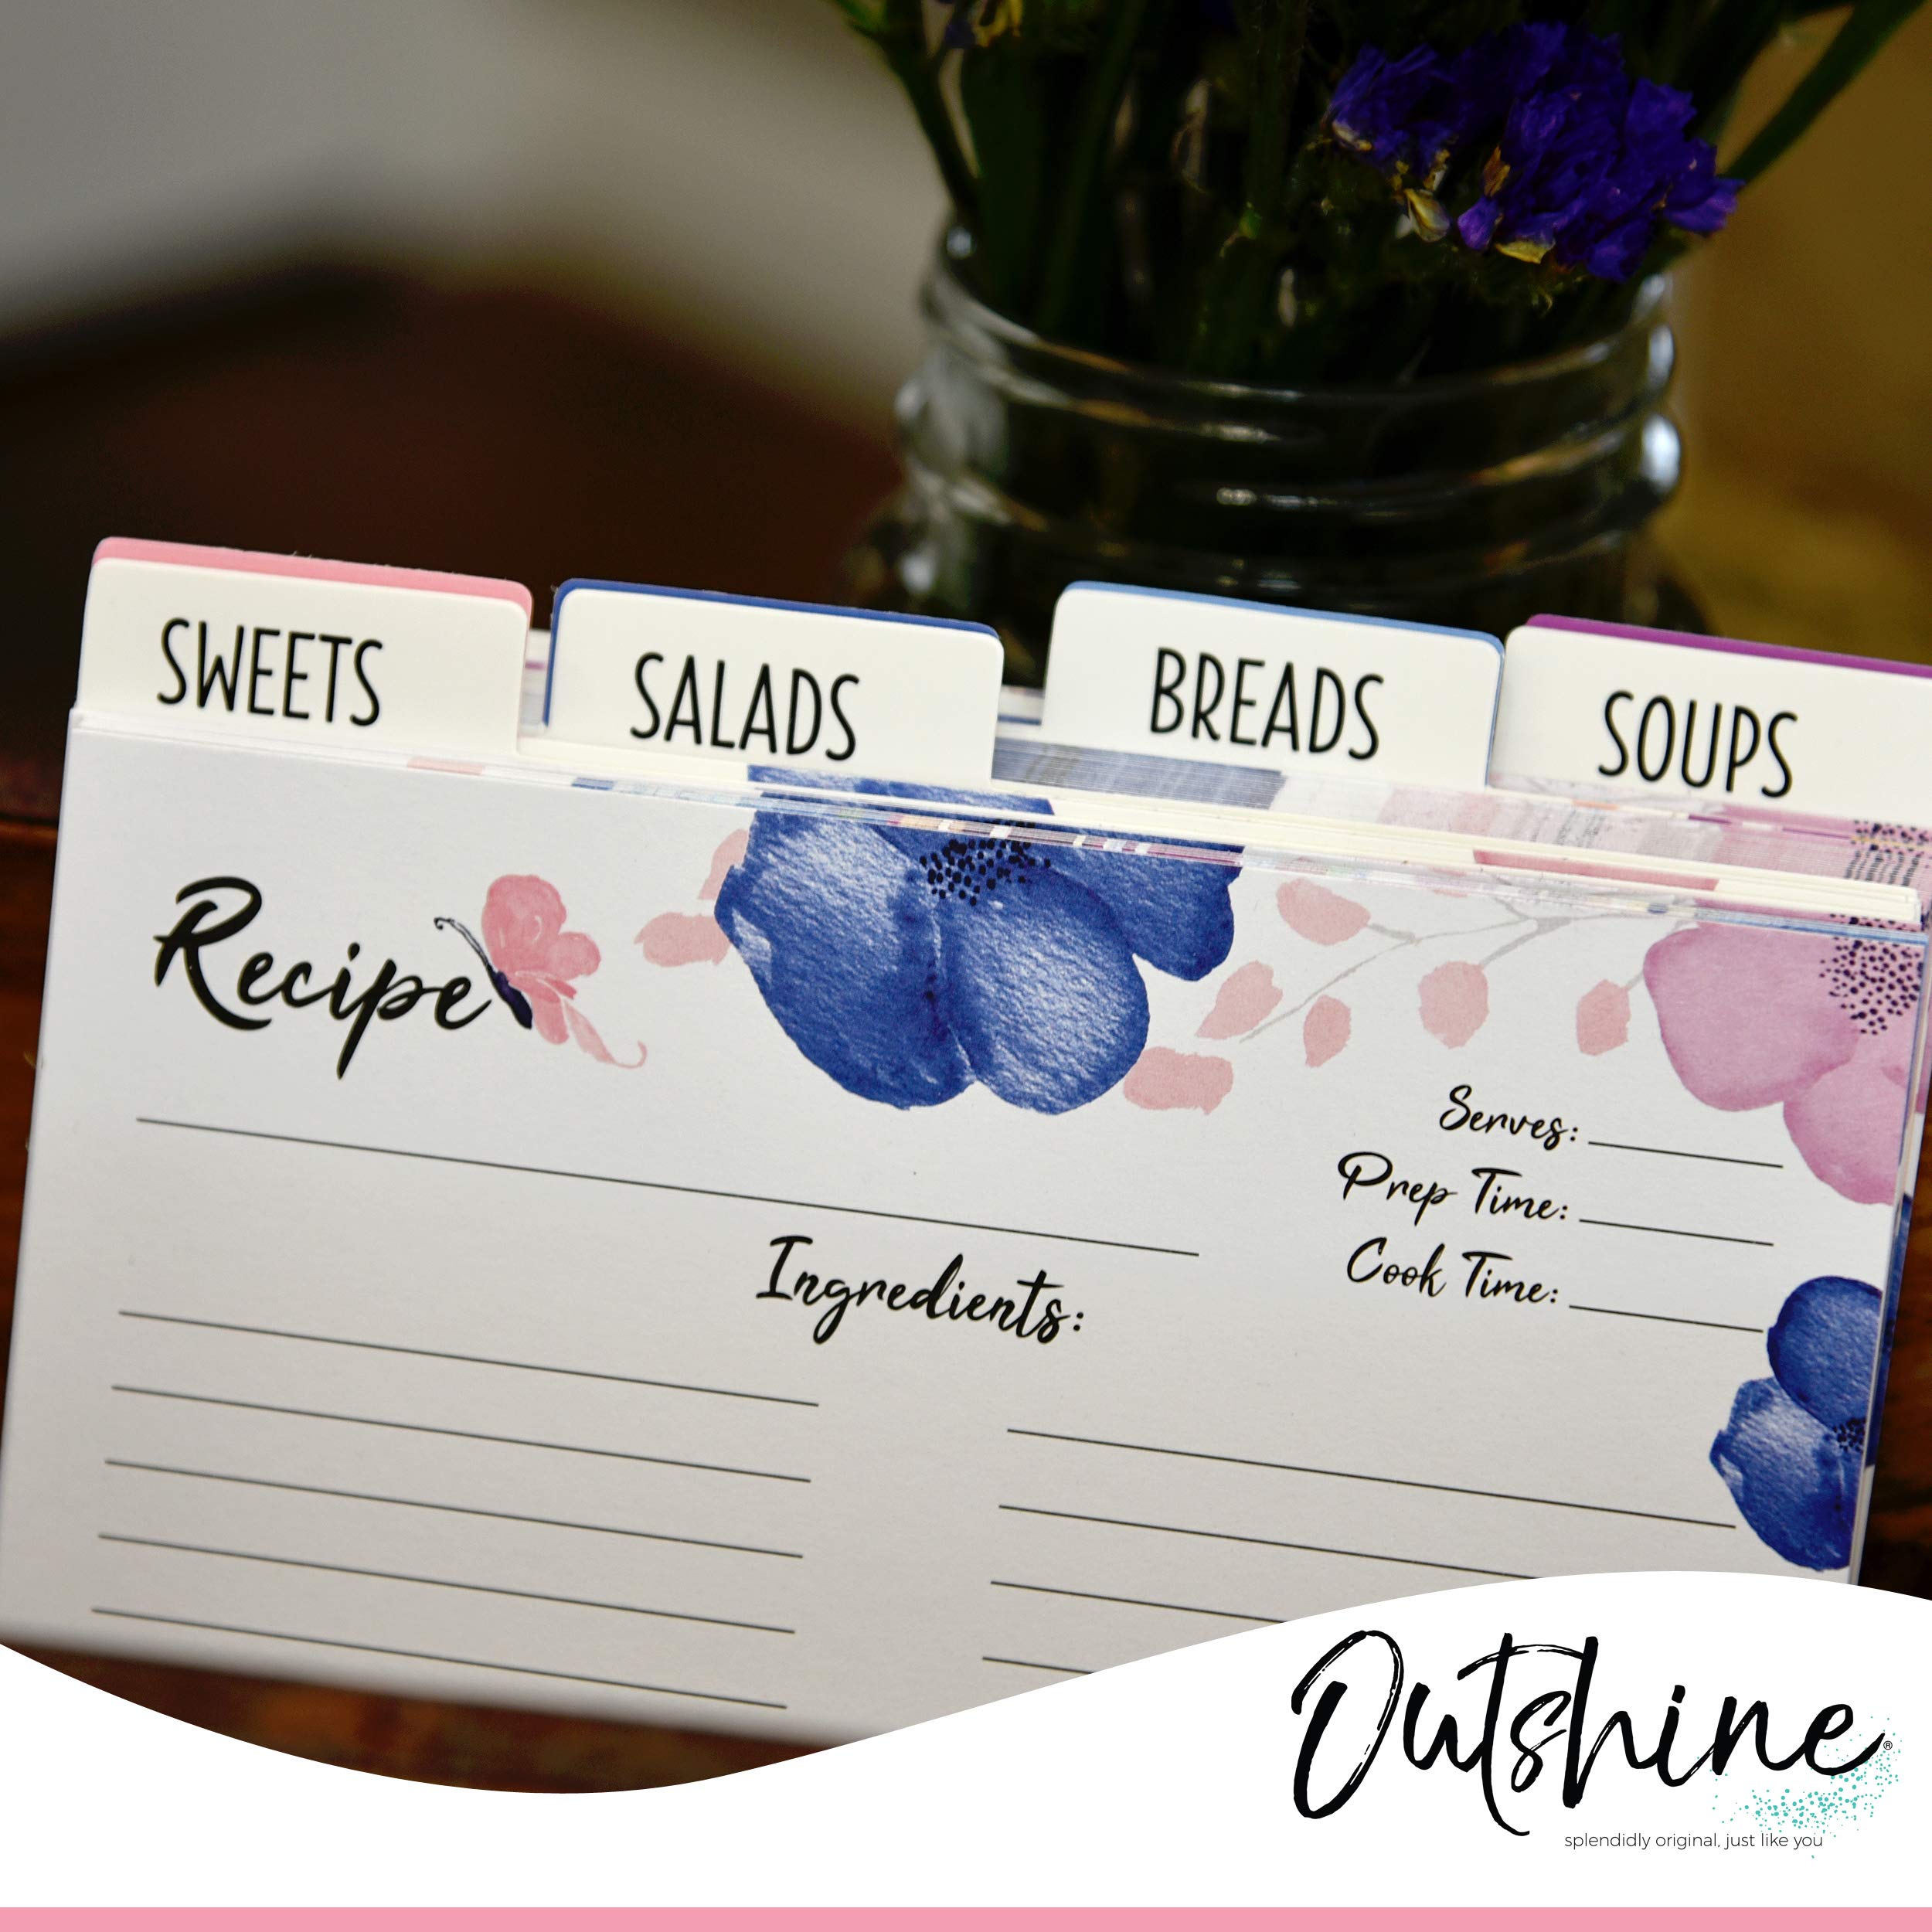 Outshine Co Premium Recipe Cards 4x6 Inches, Fruit Design (Set of 50)